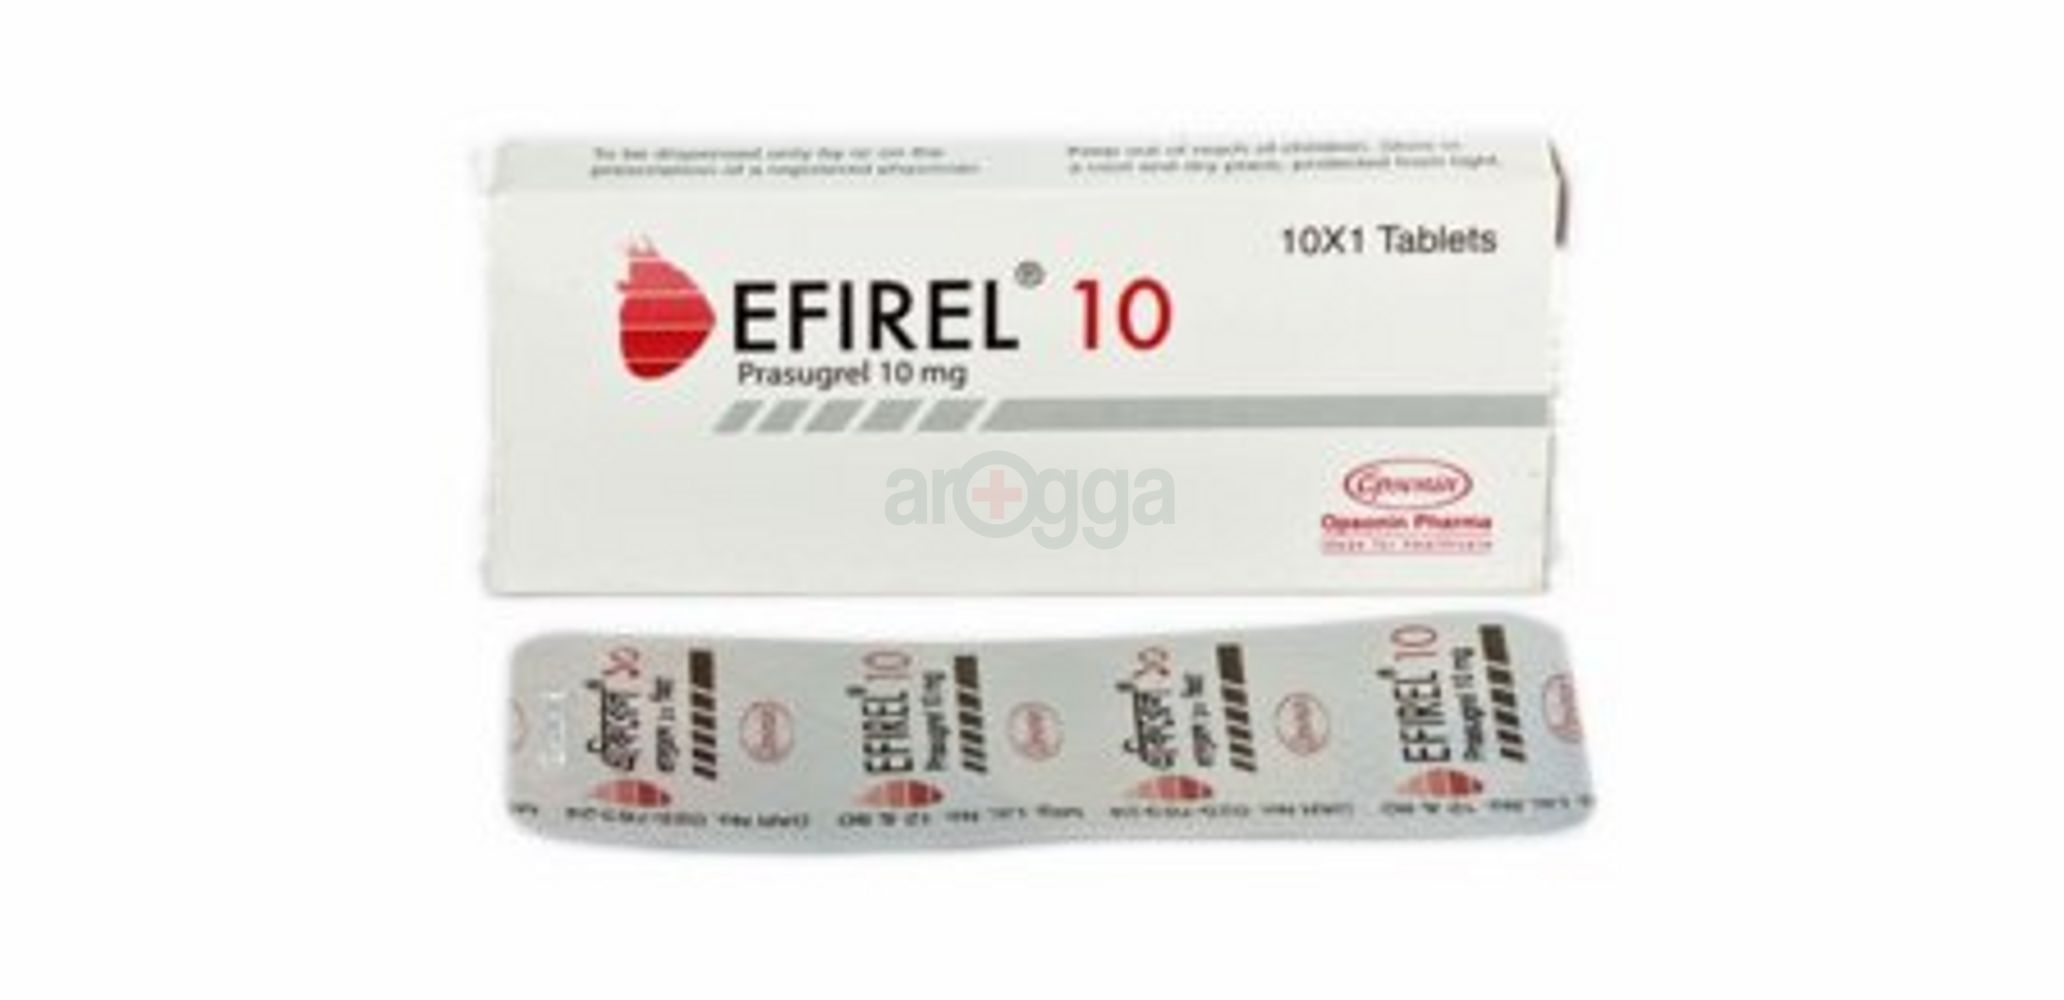 Efirel 10